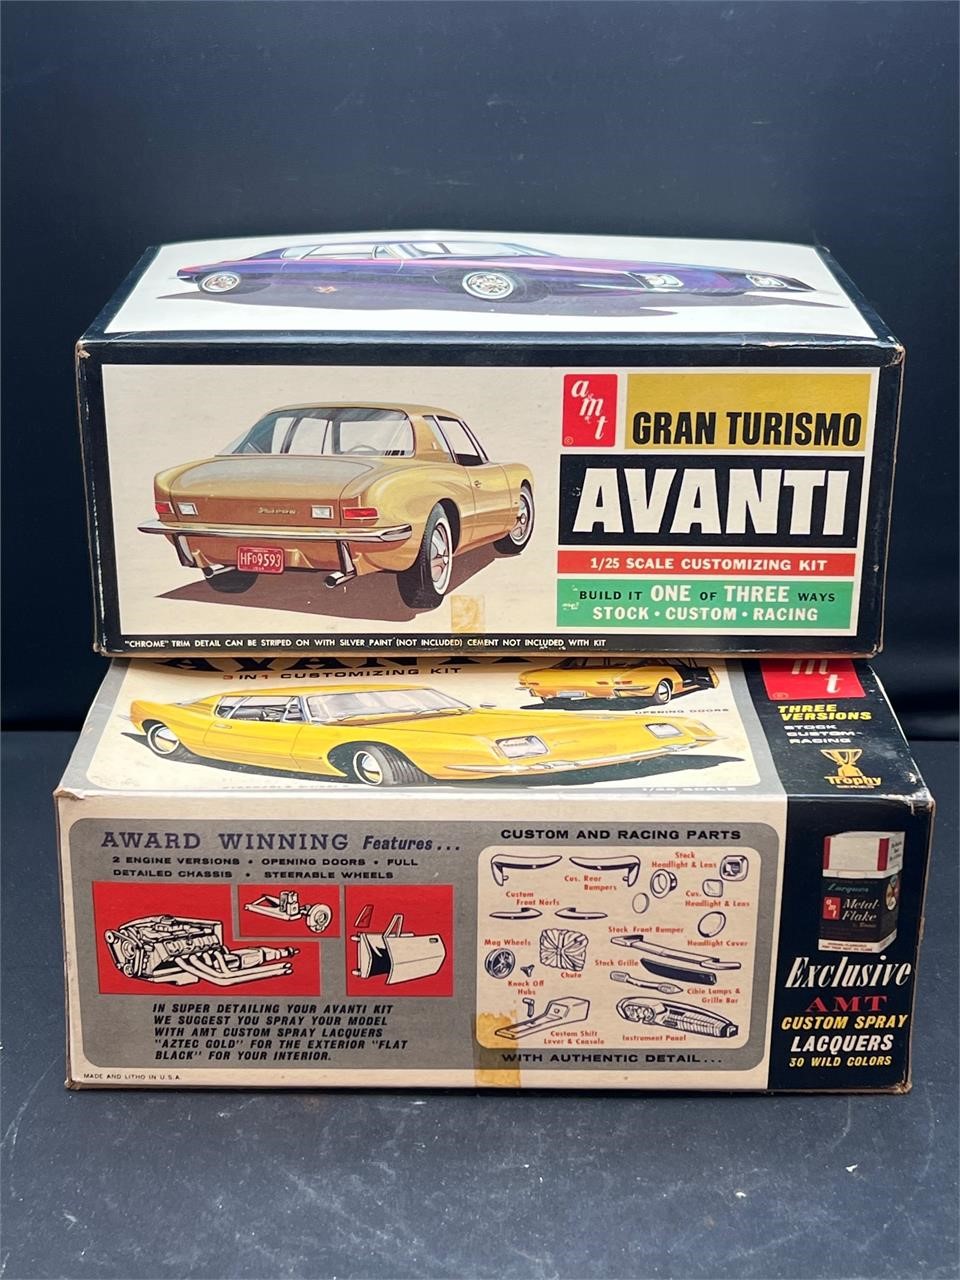 Vintage Avavti model cars